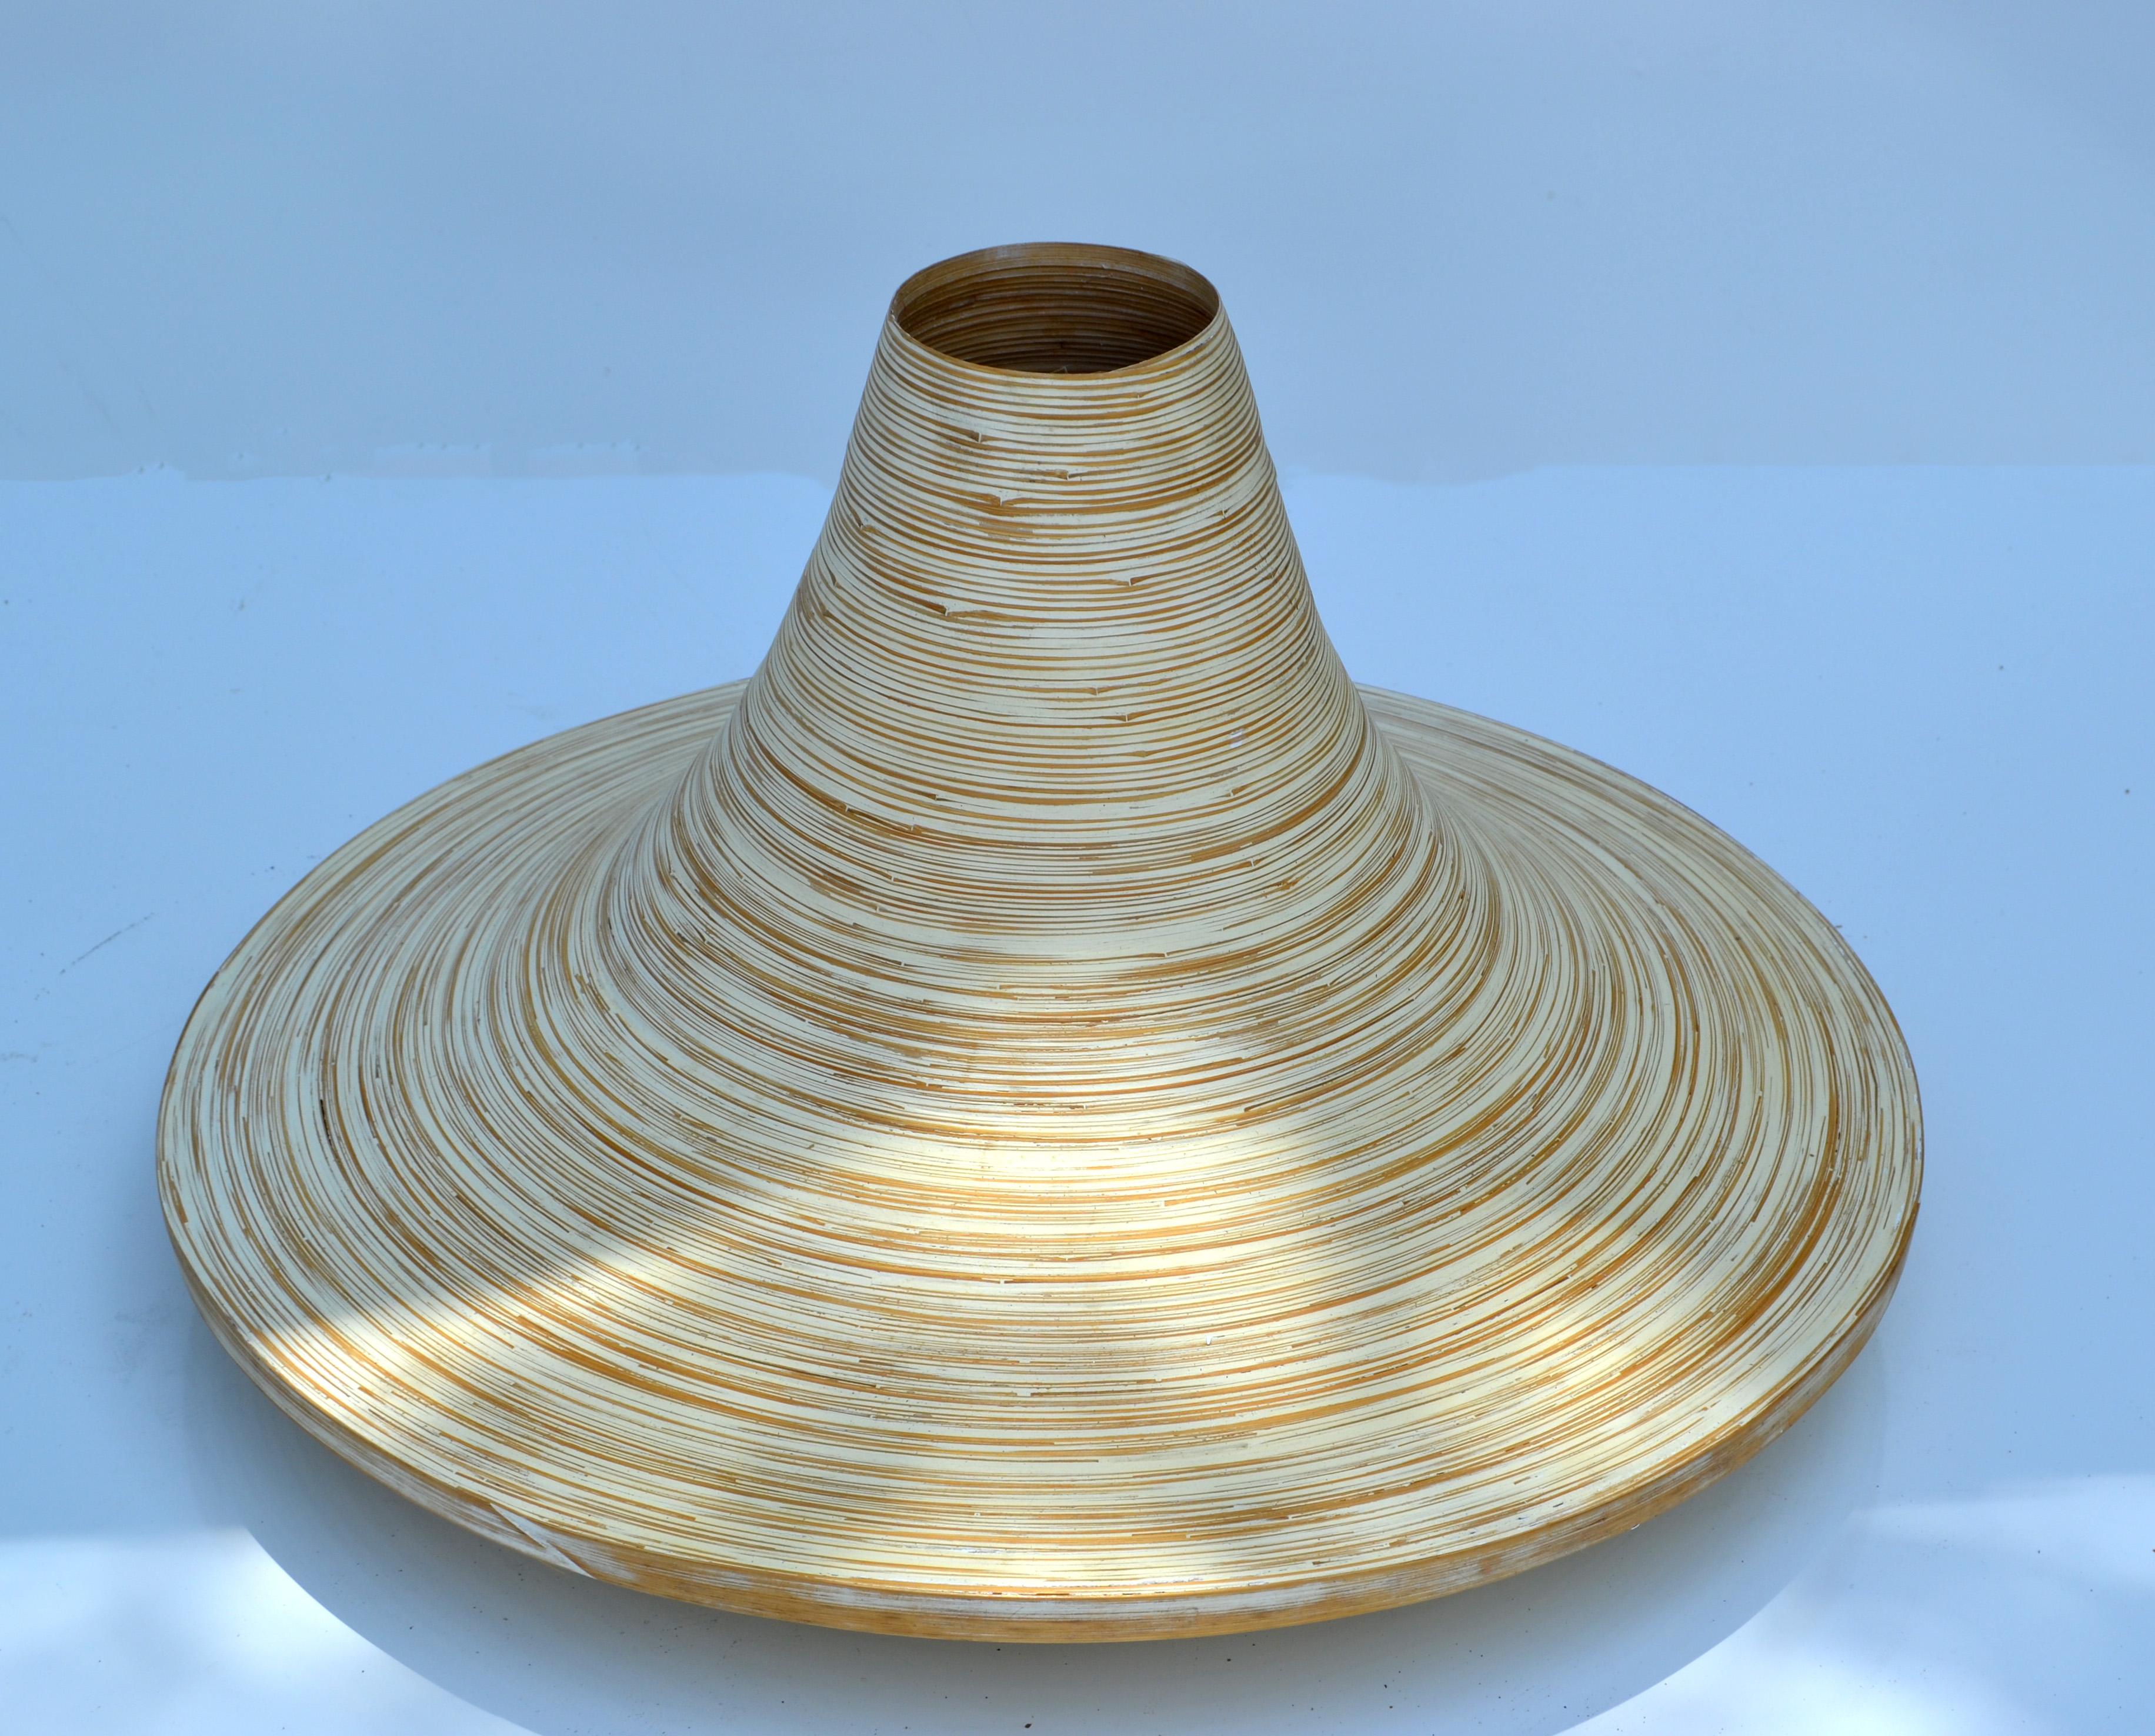 20th Century Beige Indoor Decorative Planter Swirled Cane Vase, a Pair For Sale